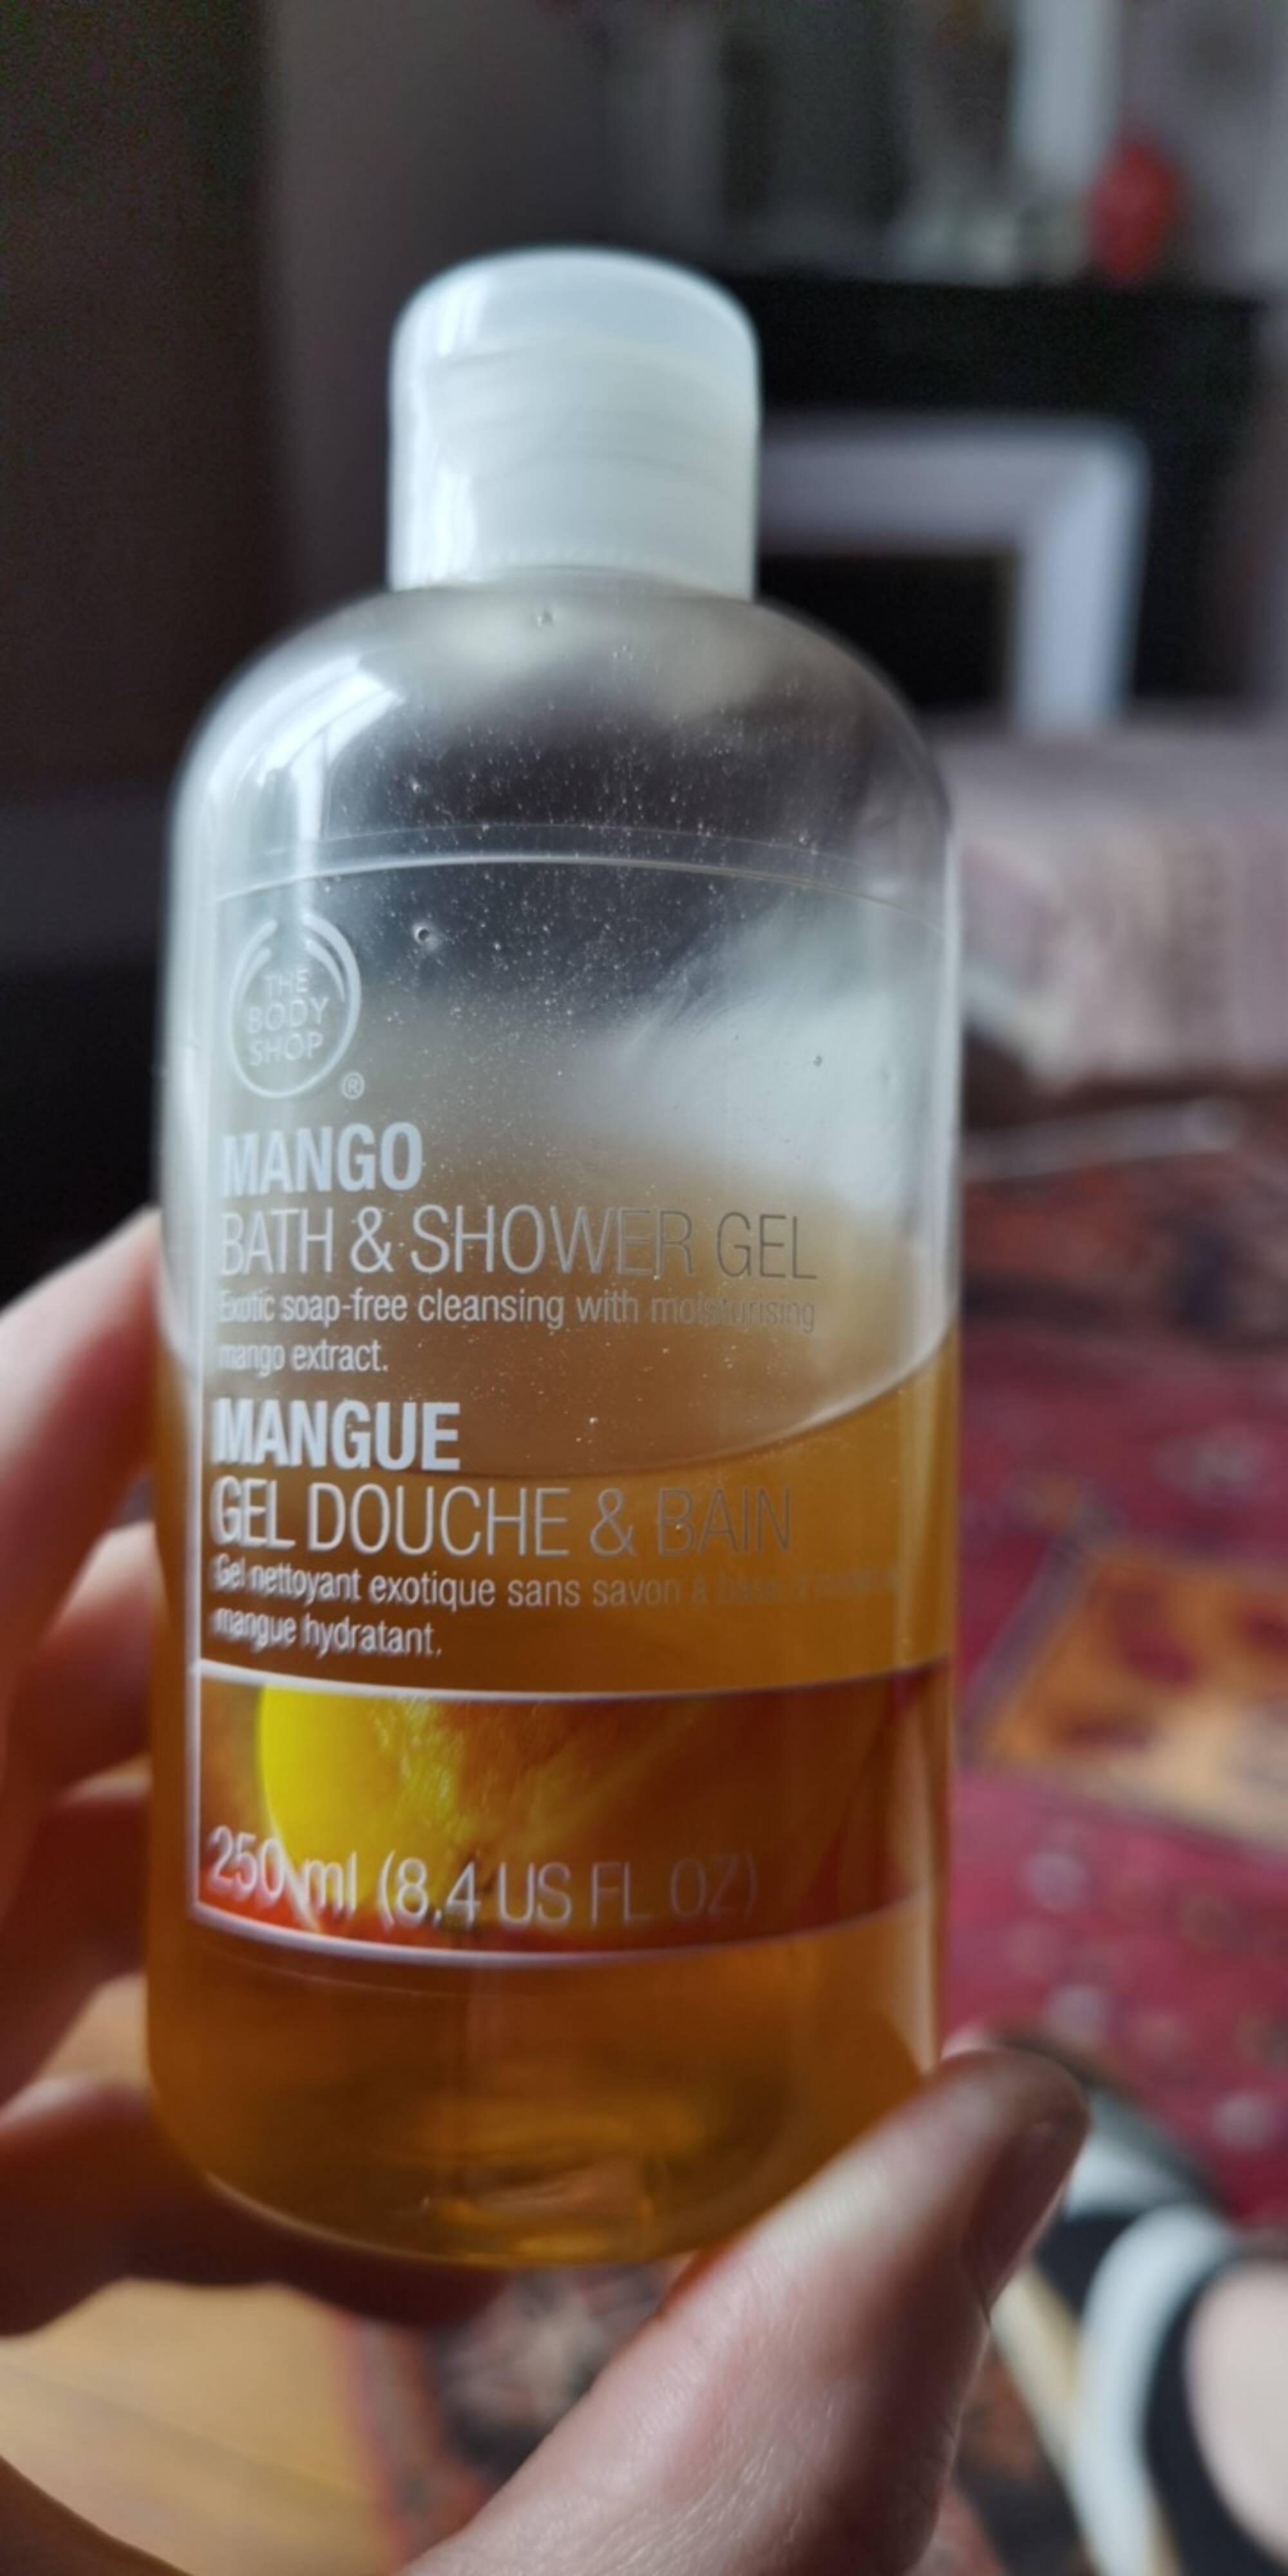 THE BODY SHOP - Mangue - Gel douche & bain